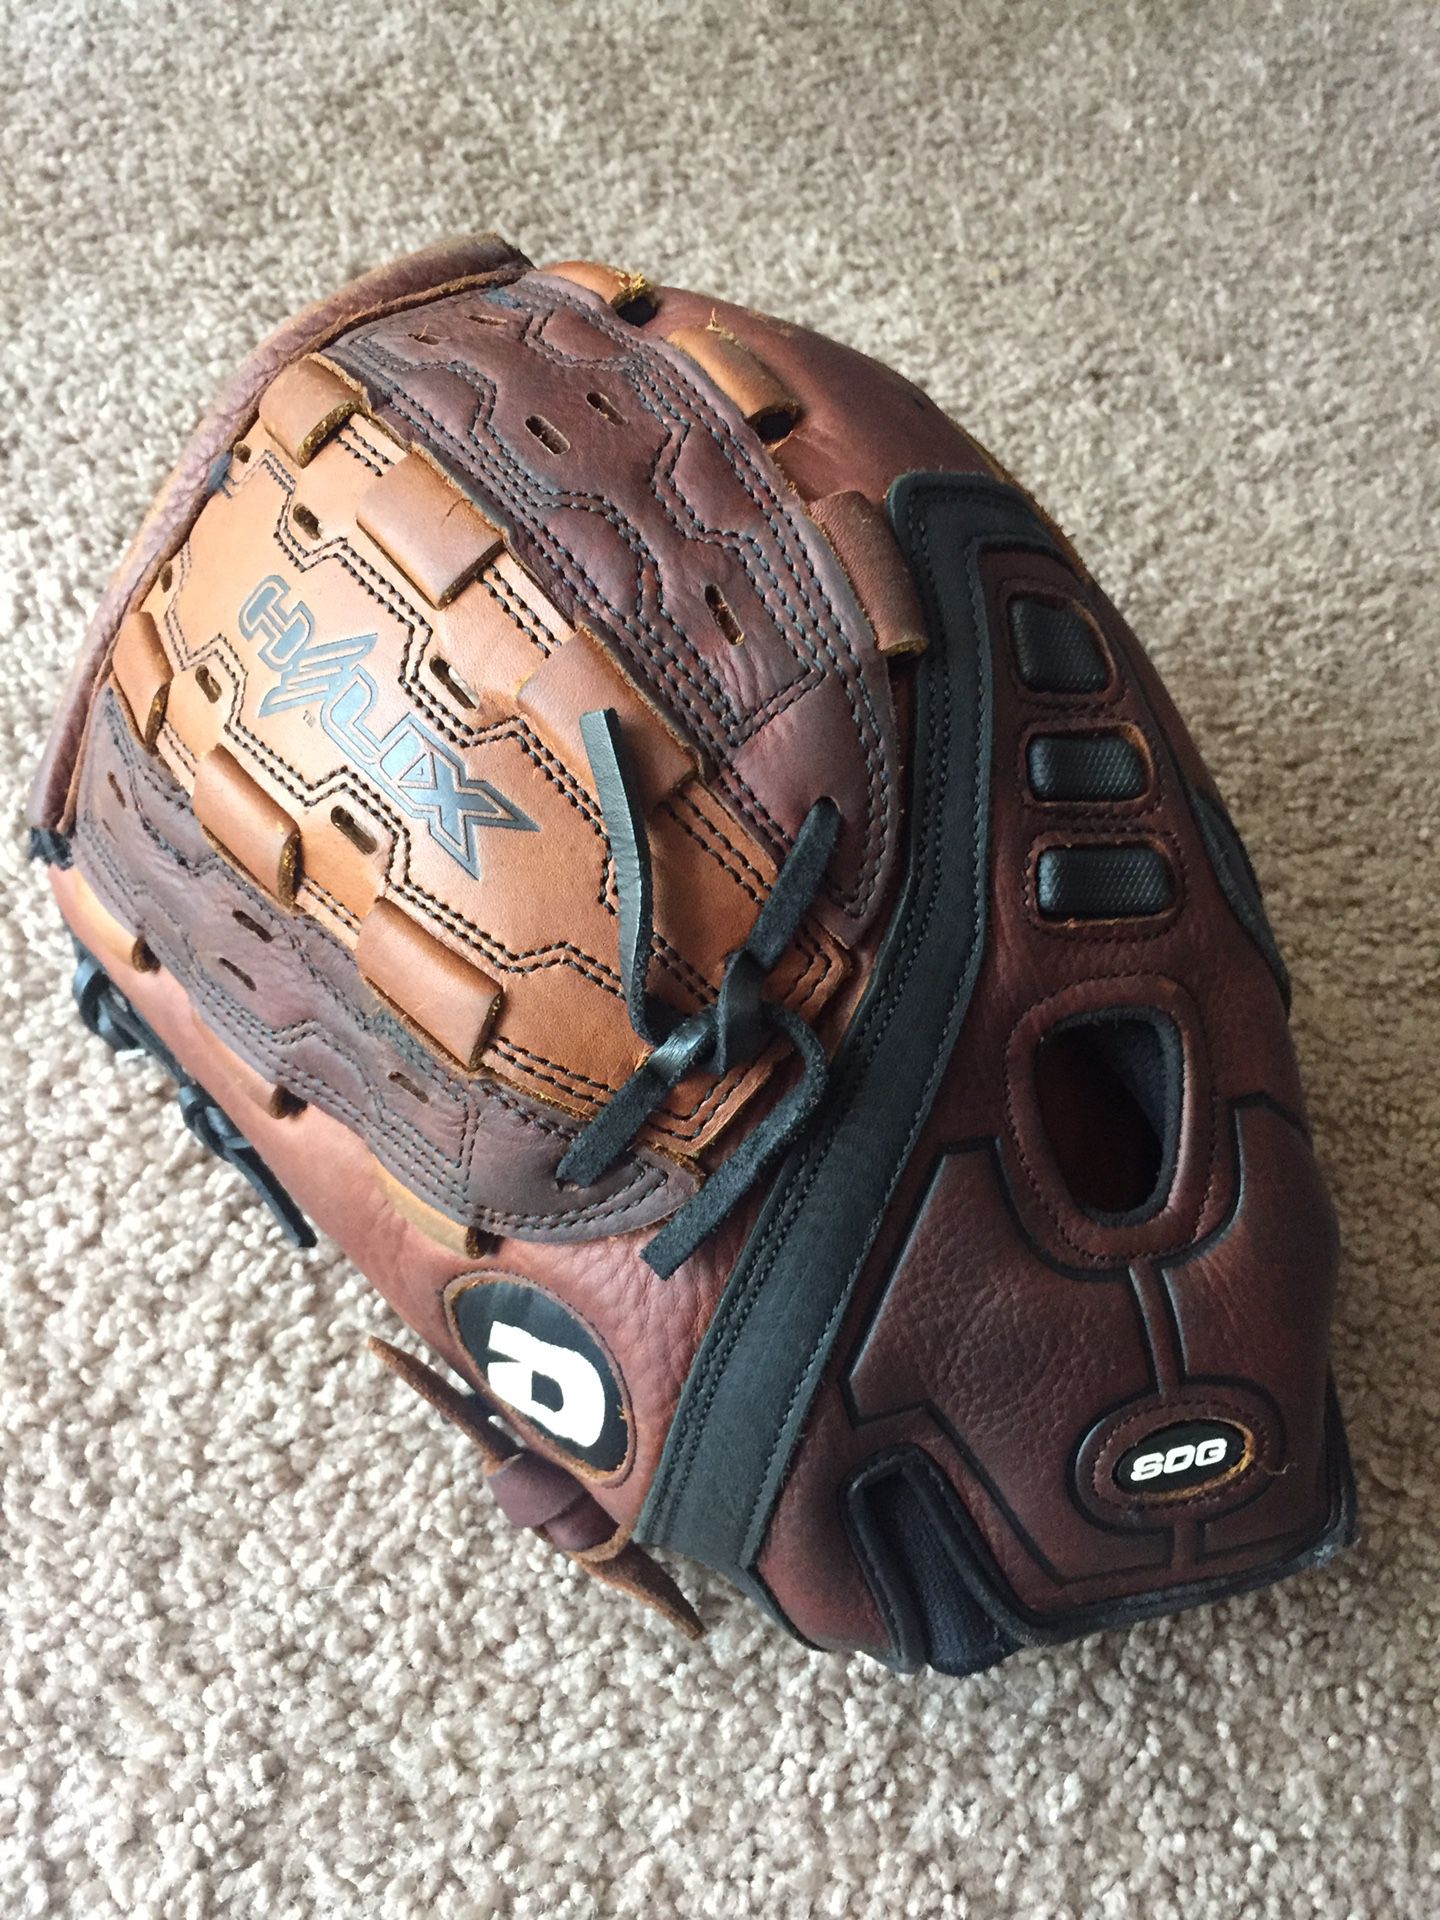 LHT Demarini Softball Glove (high quality)